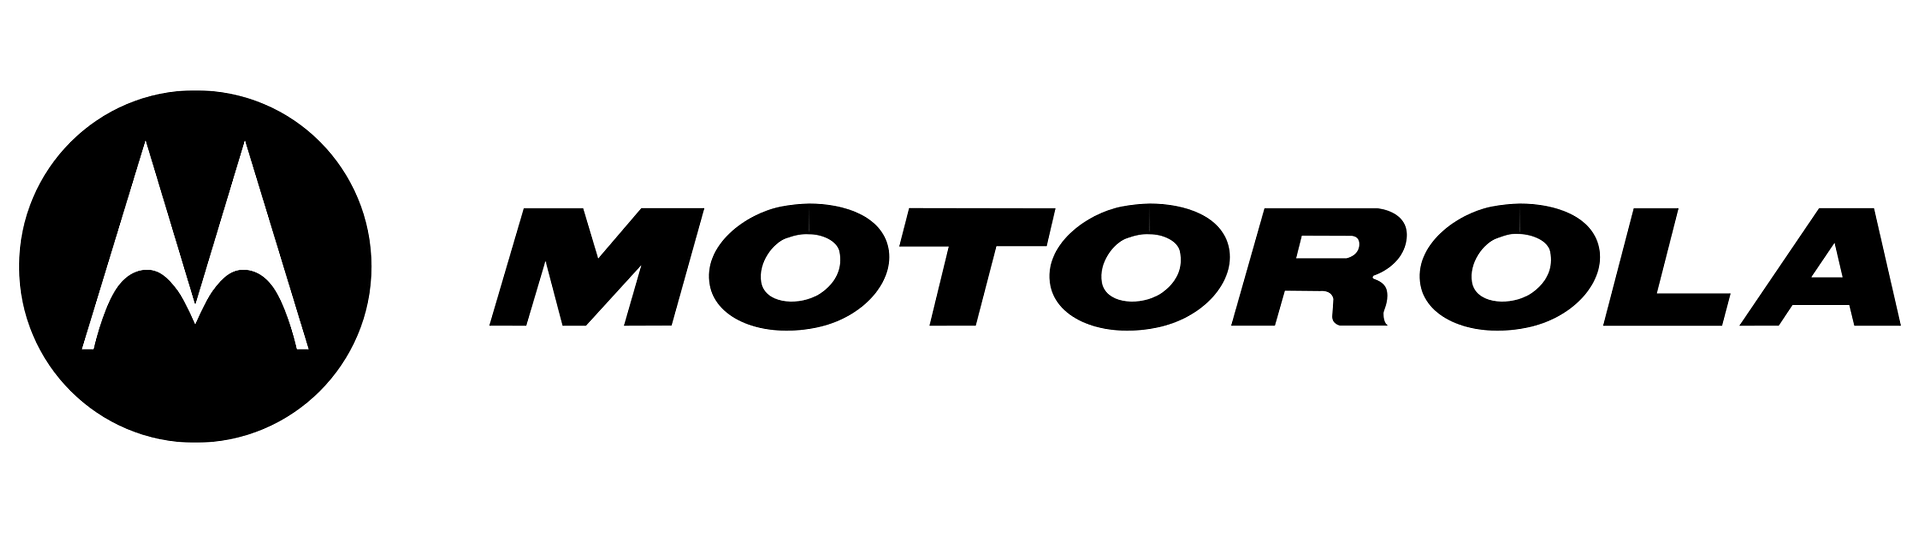 Motorola-logo-black-and-white copy